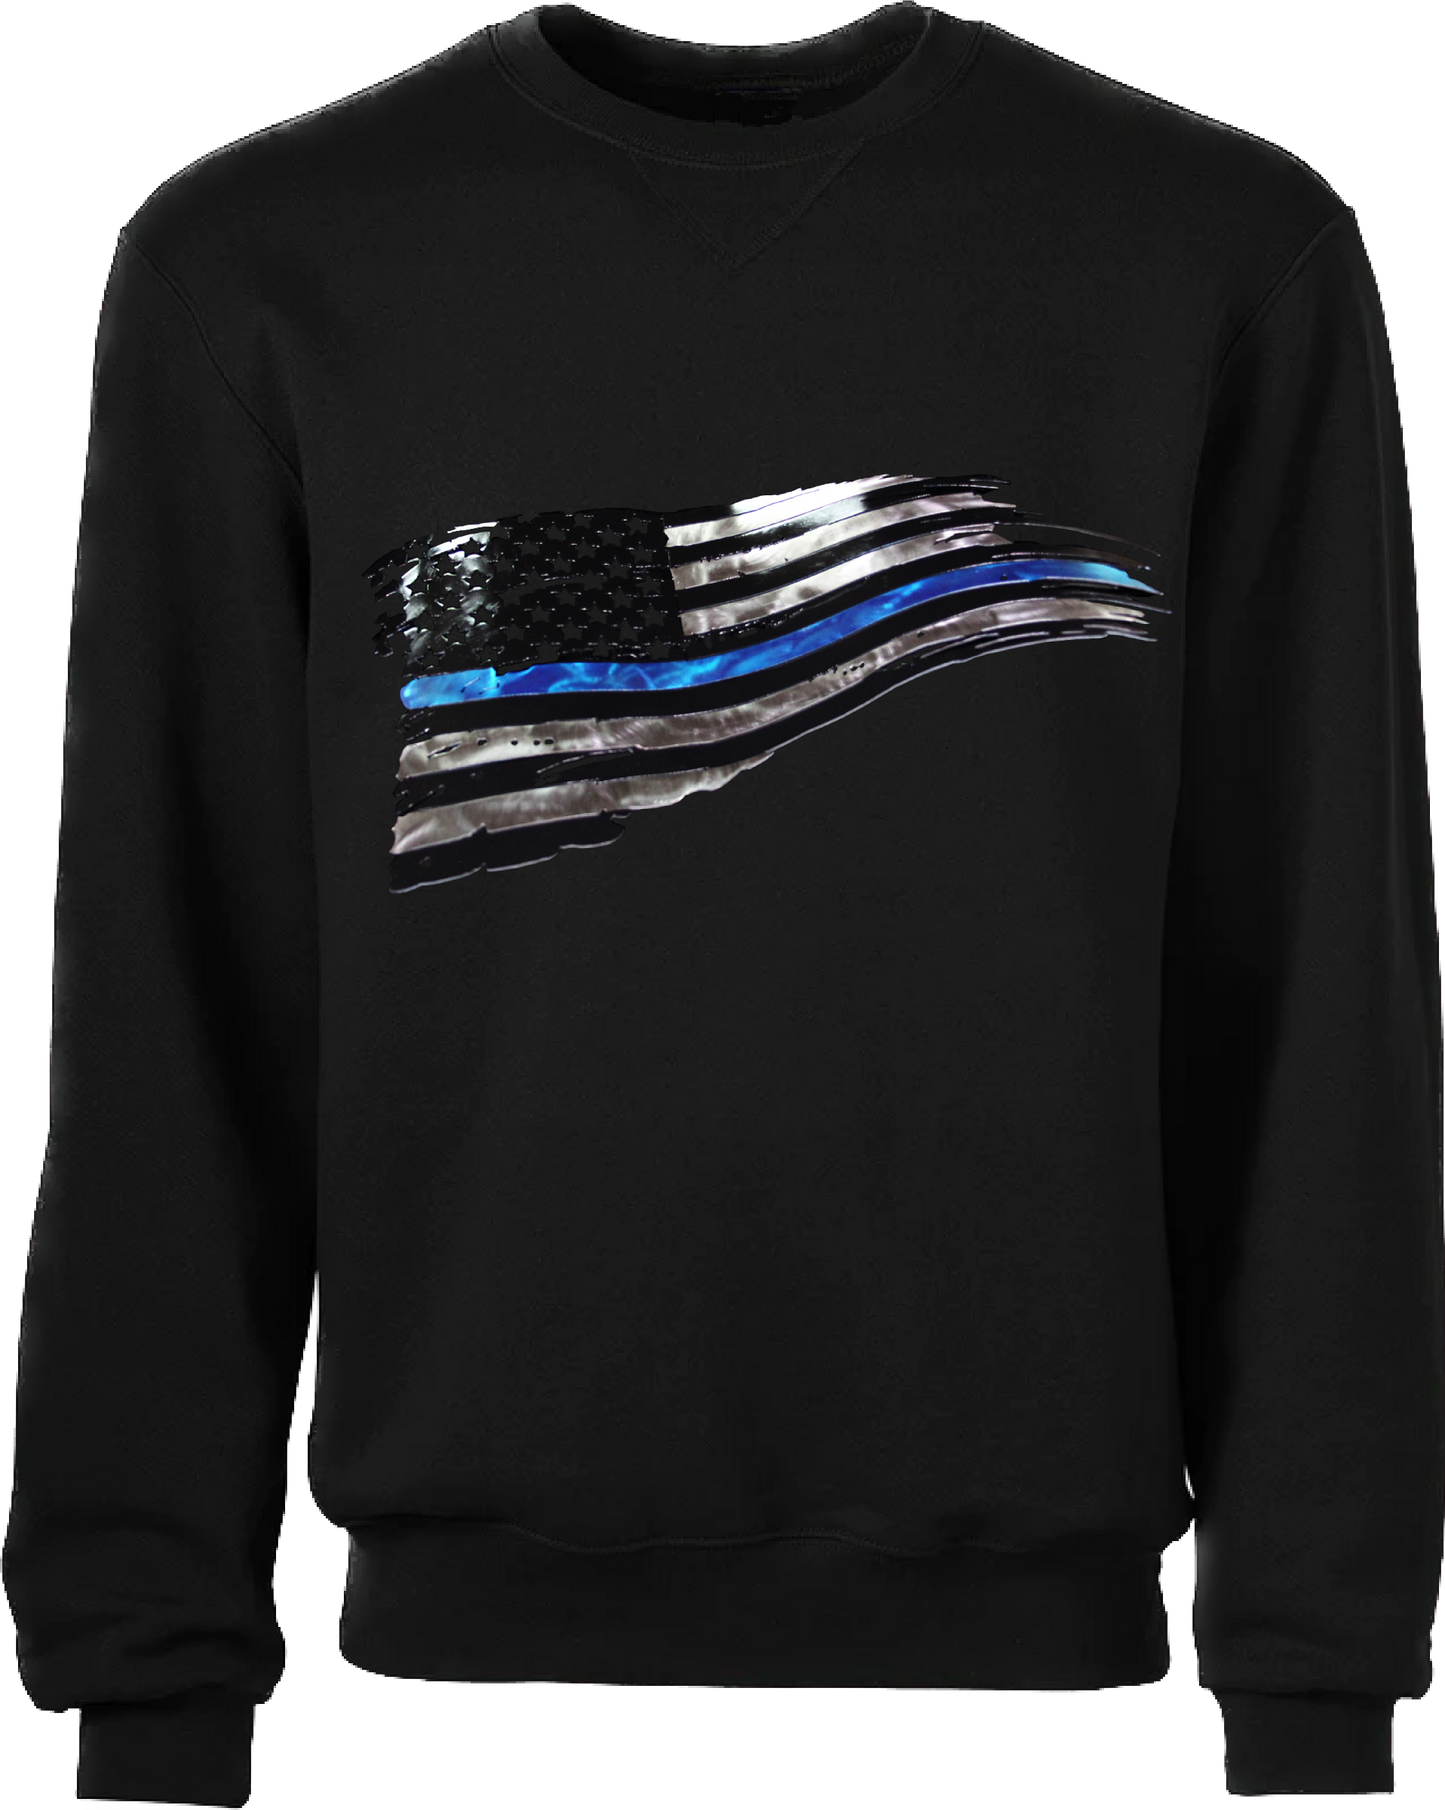 United States Thin Blue Line Crewneck Sweatshirt